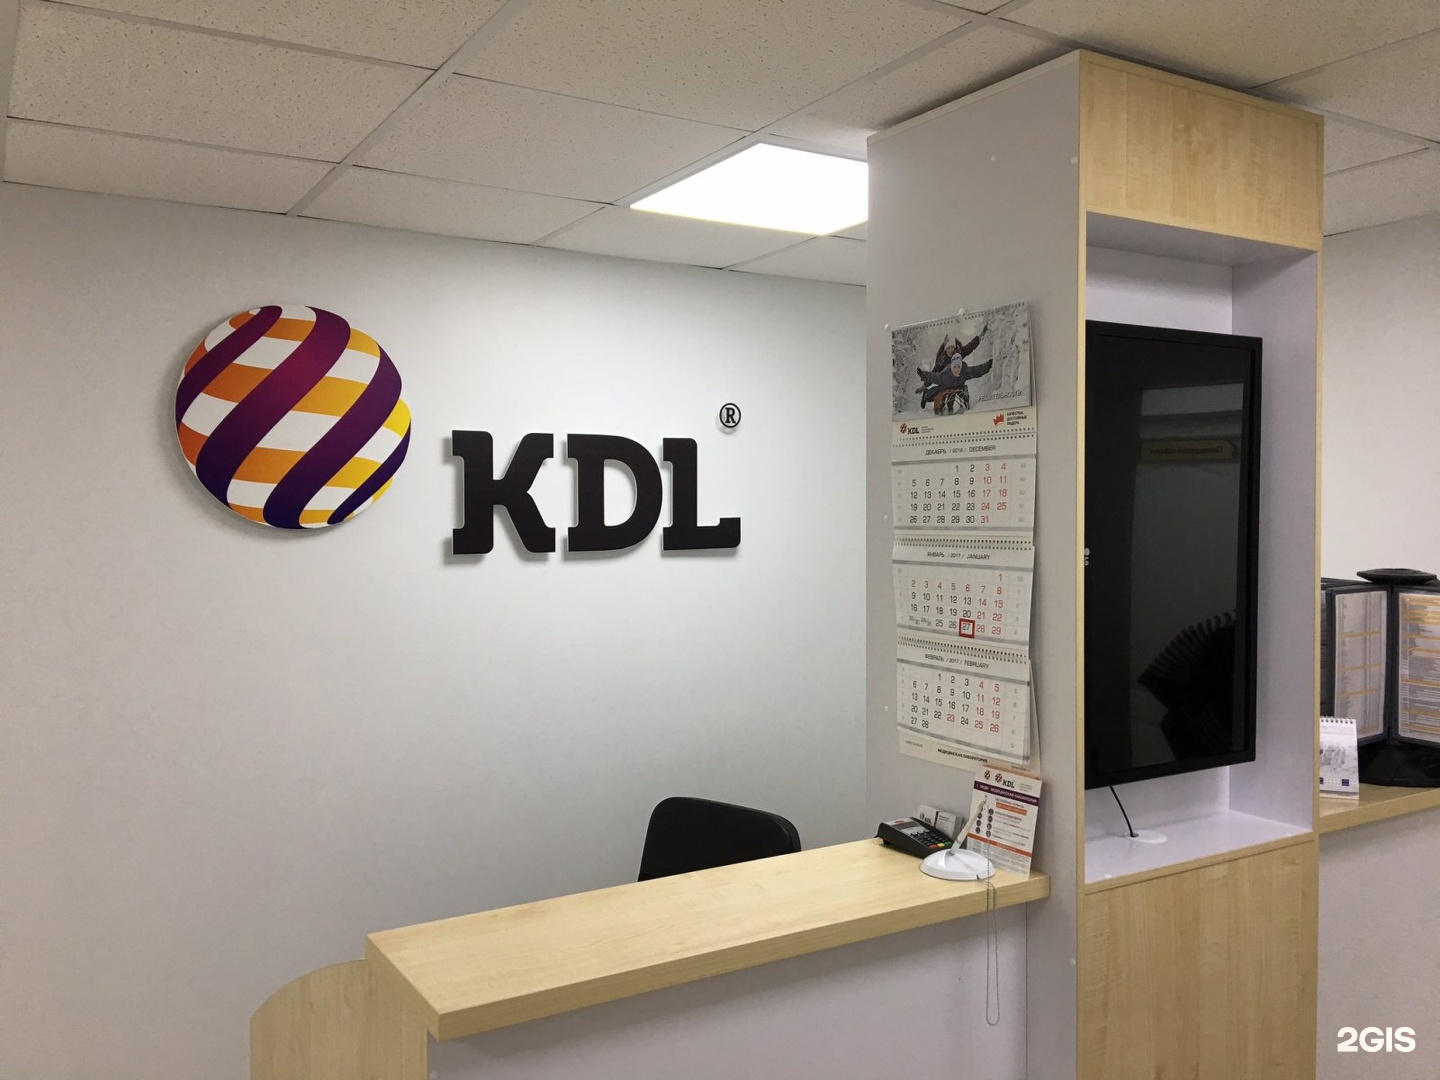 Кдл позвонить. КДЛ лаборатория Омск. KDL логотип. Эмблема КДЛ лаборатории. KDL В Омске.